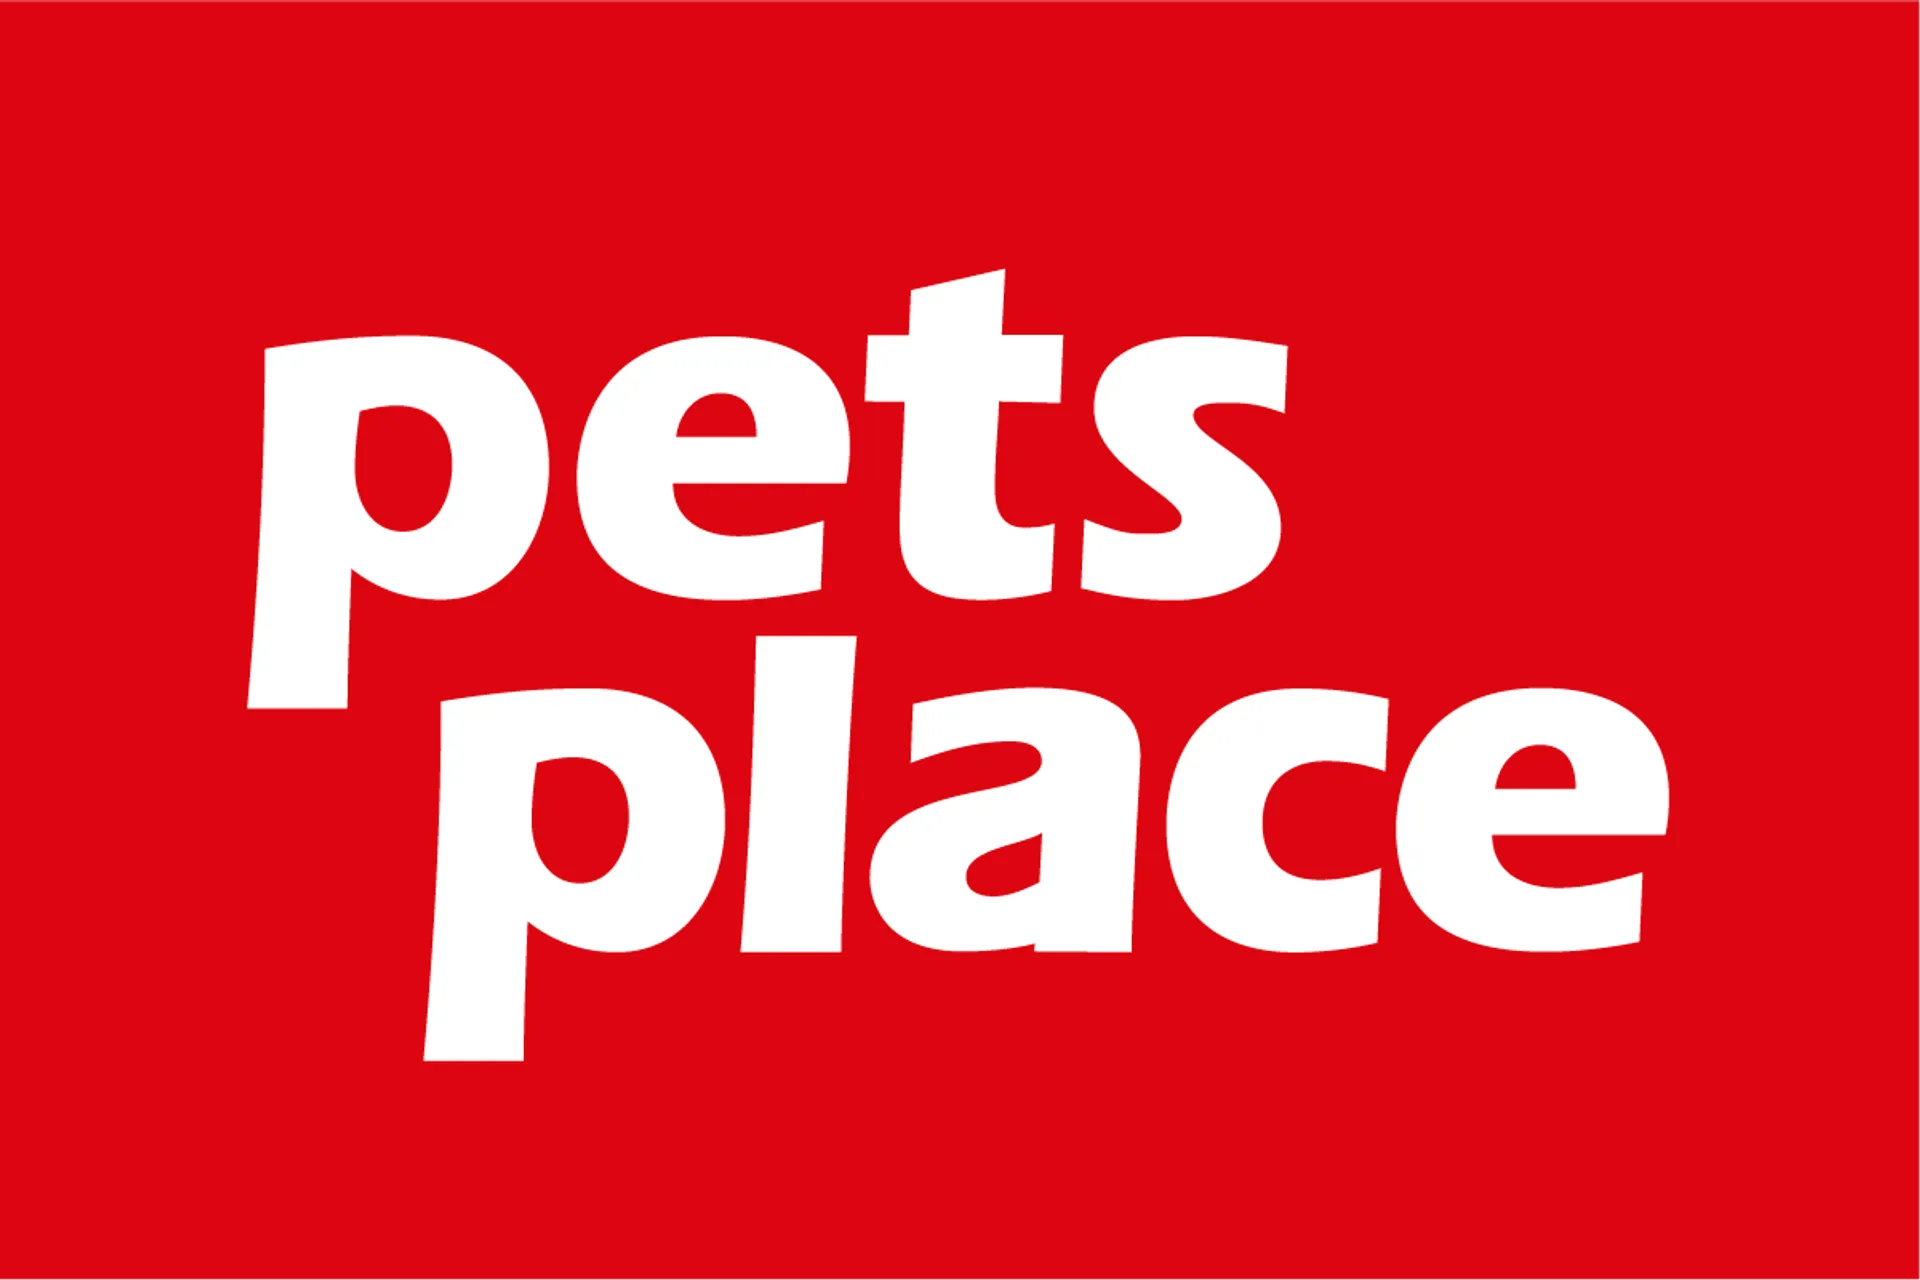 PETS PLACE logo in de folder van deze week